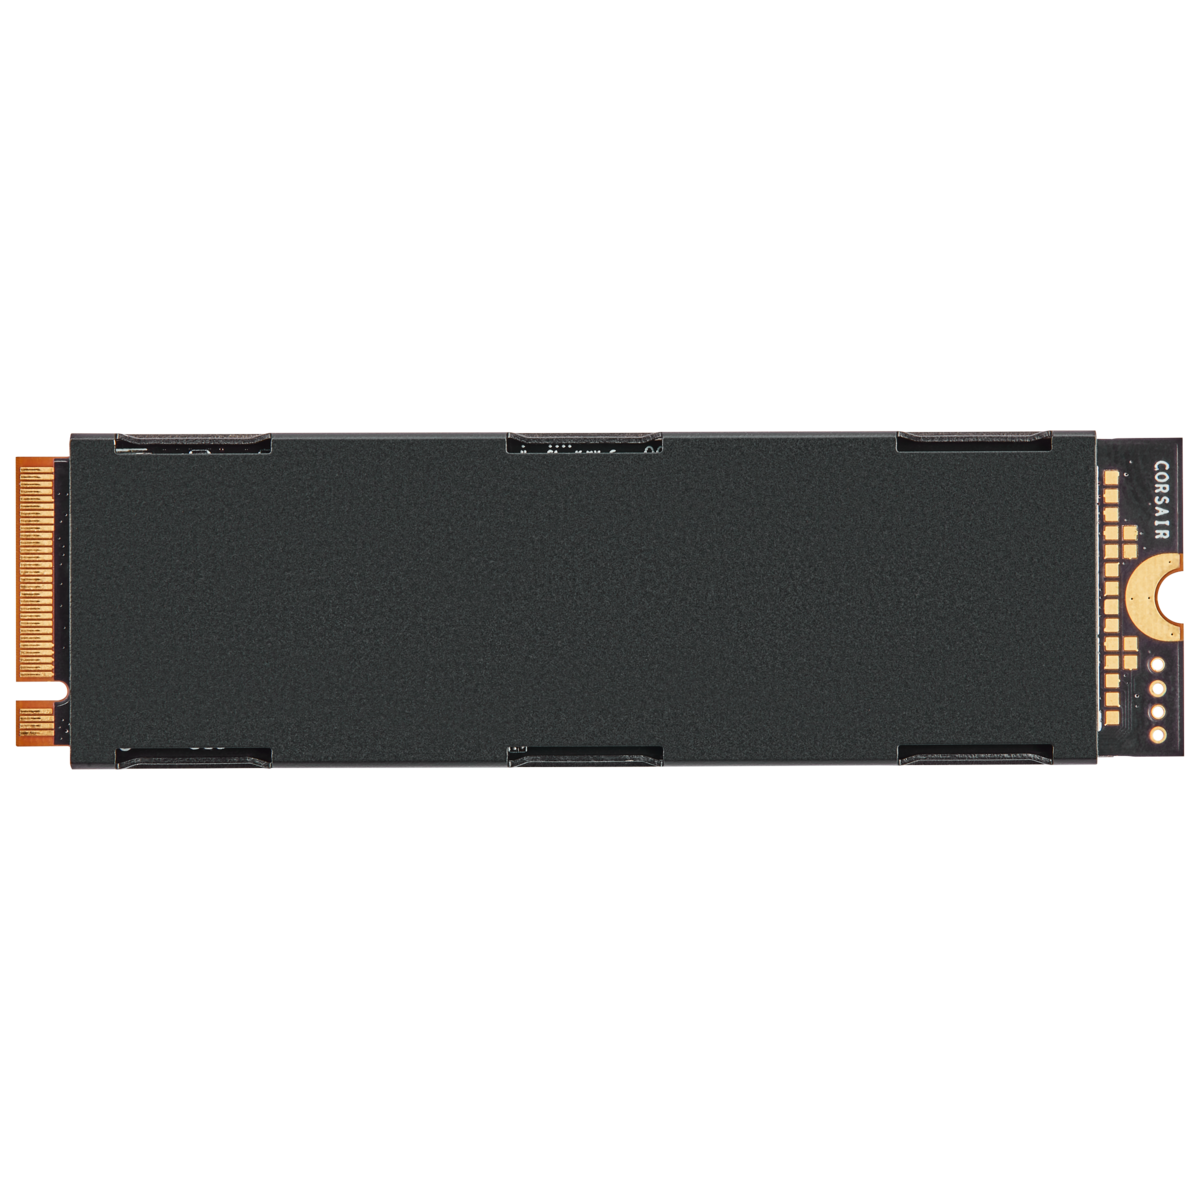 Corsair Force Series Gen.4 MP600 500GB M.2 NVMe SSD